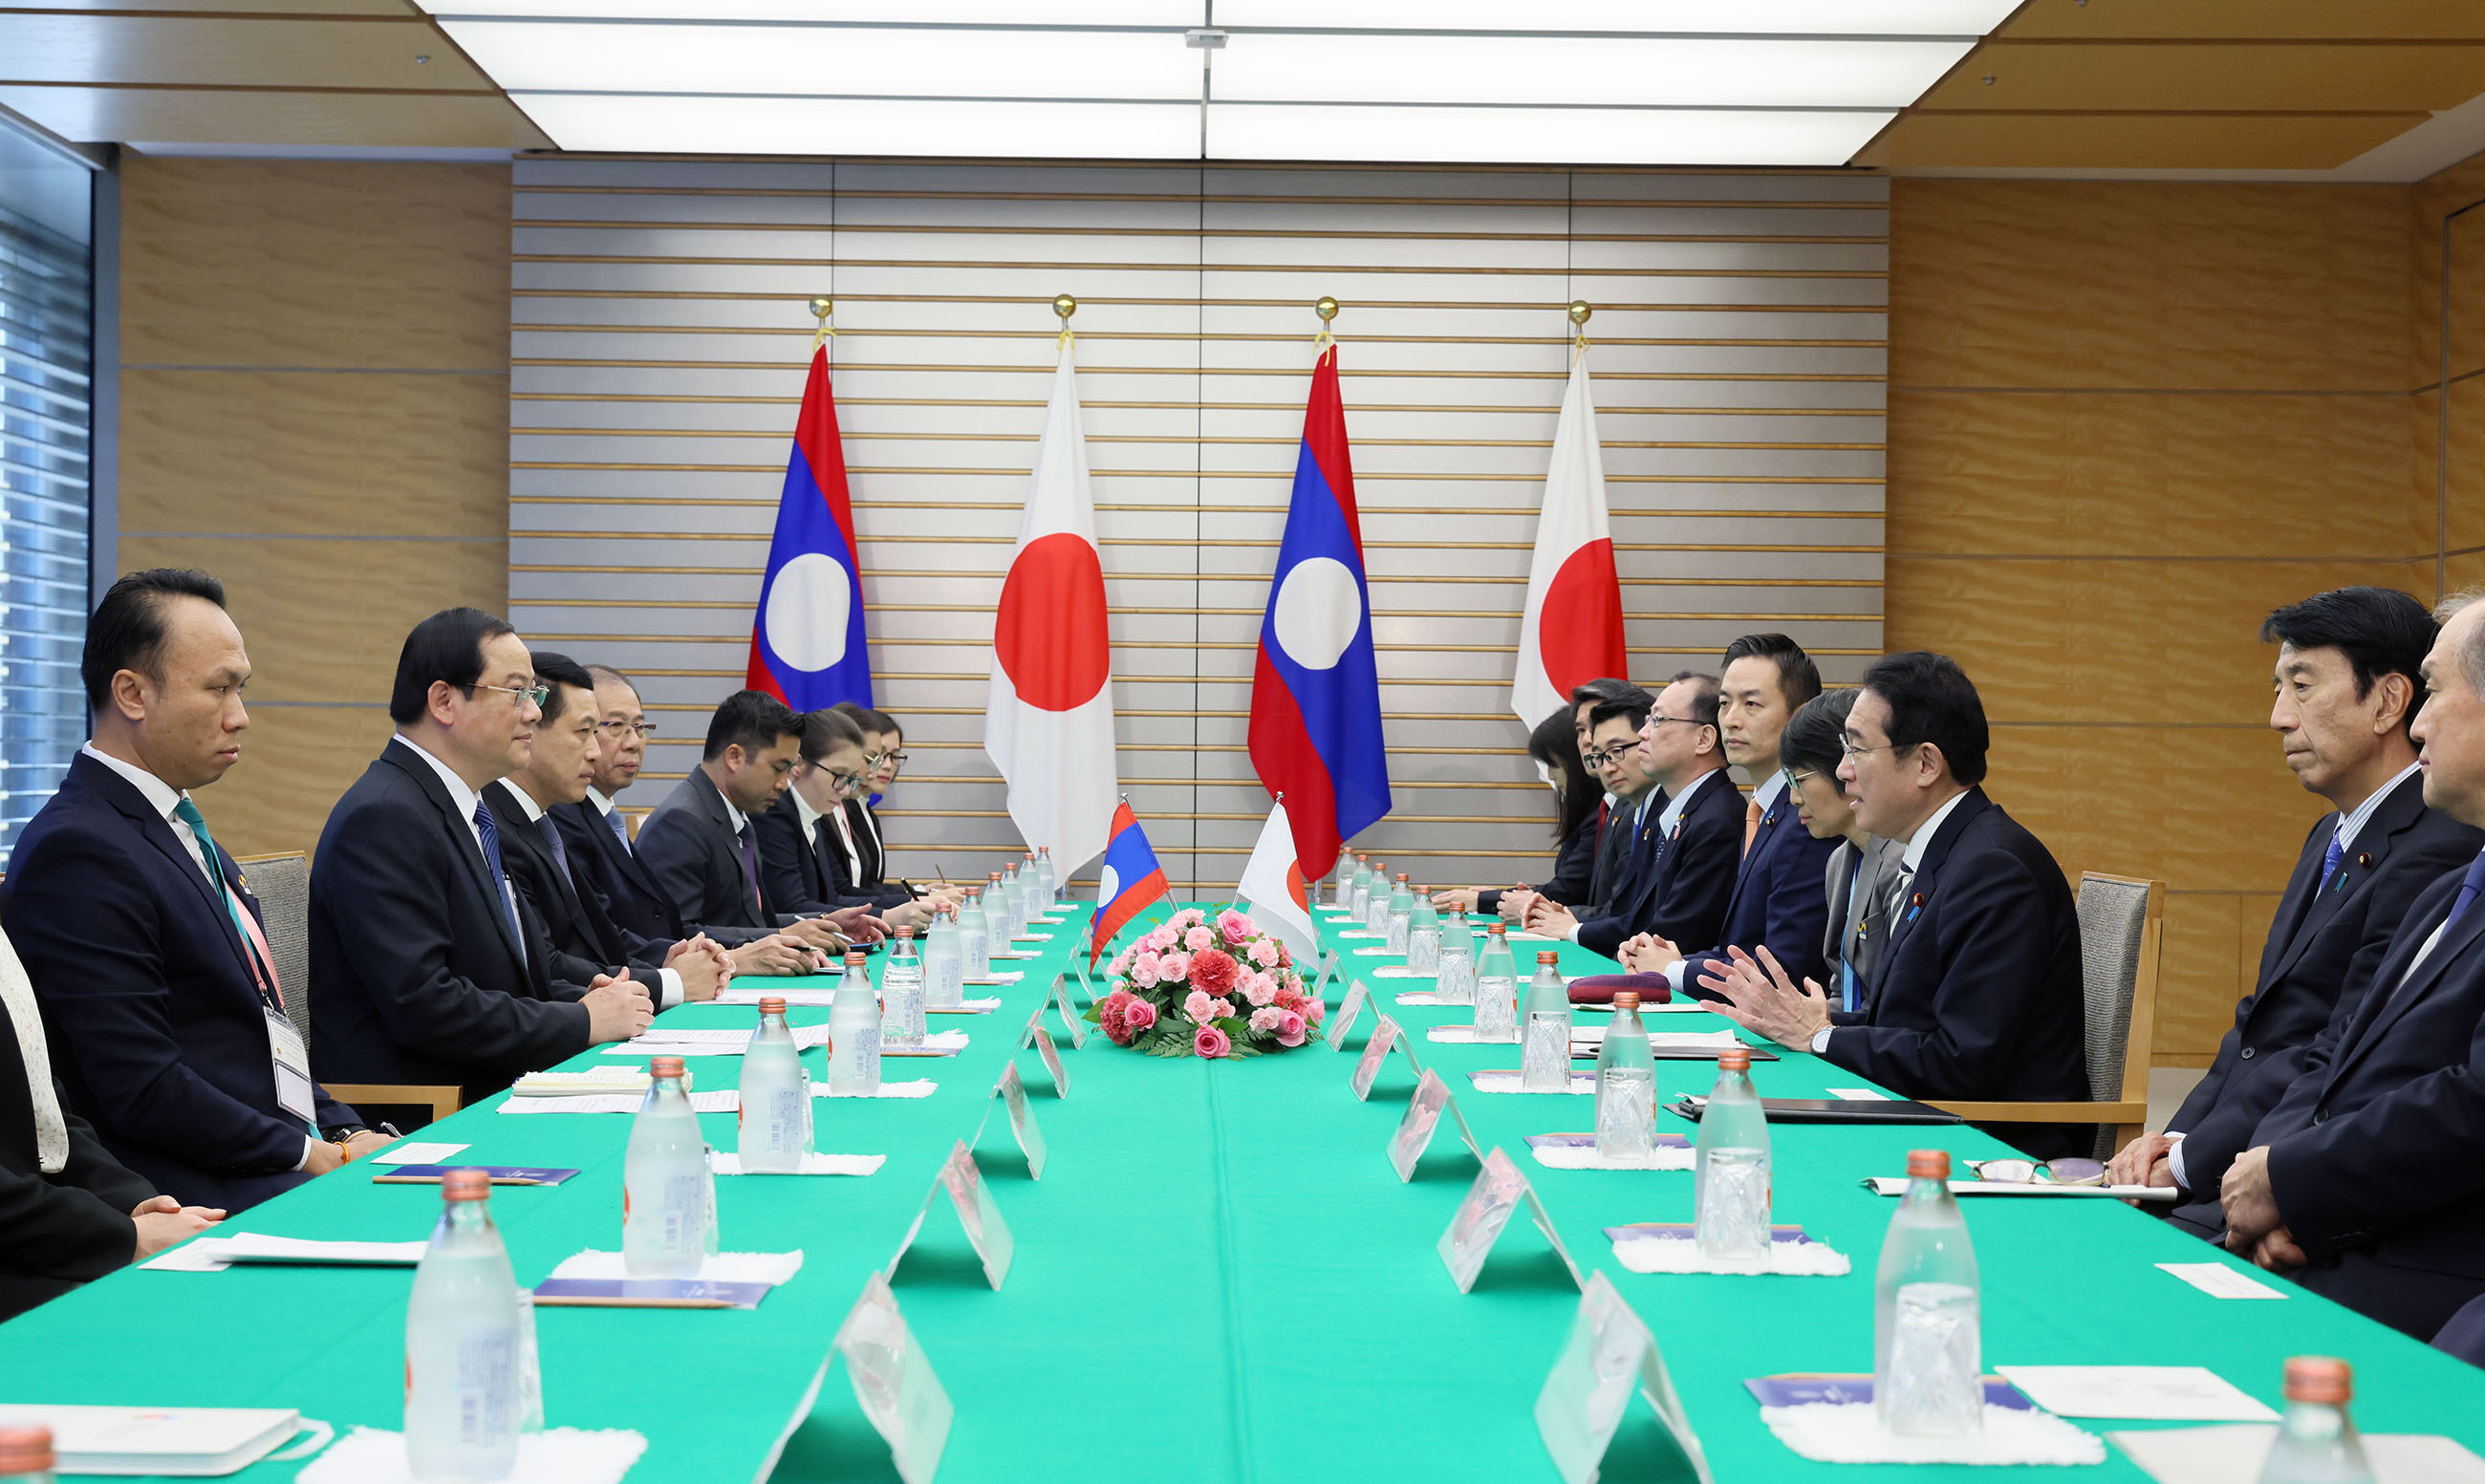 Japan-Laos Summit meeting (3)